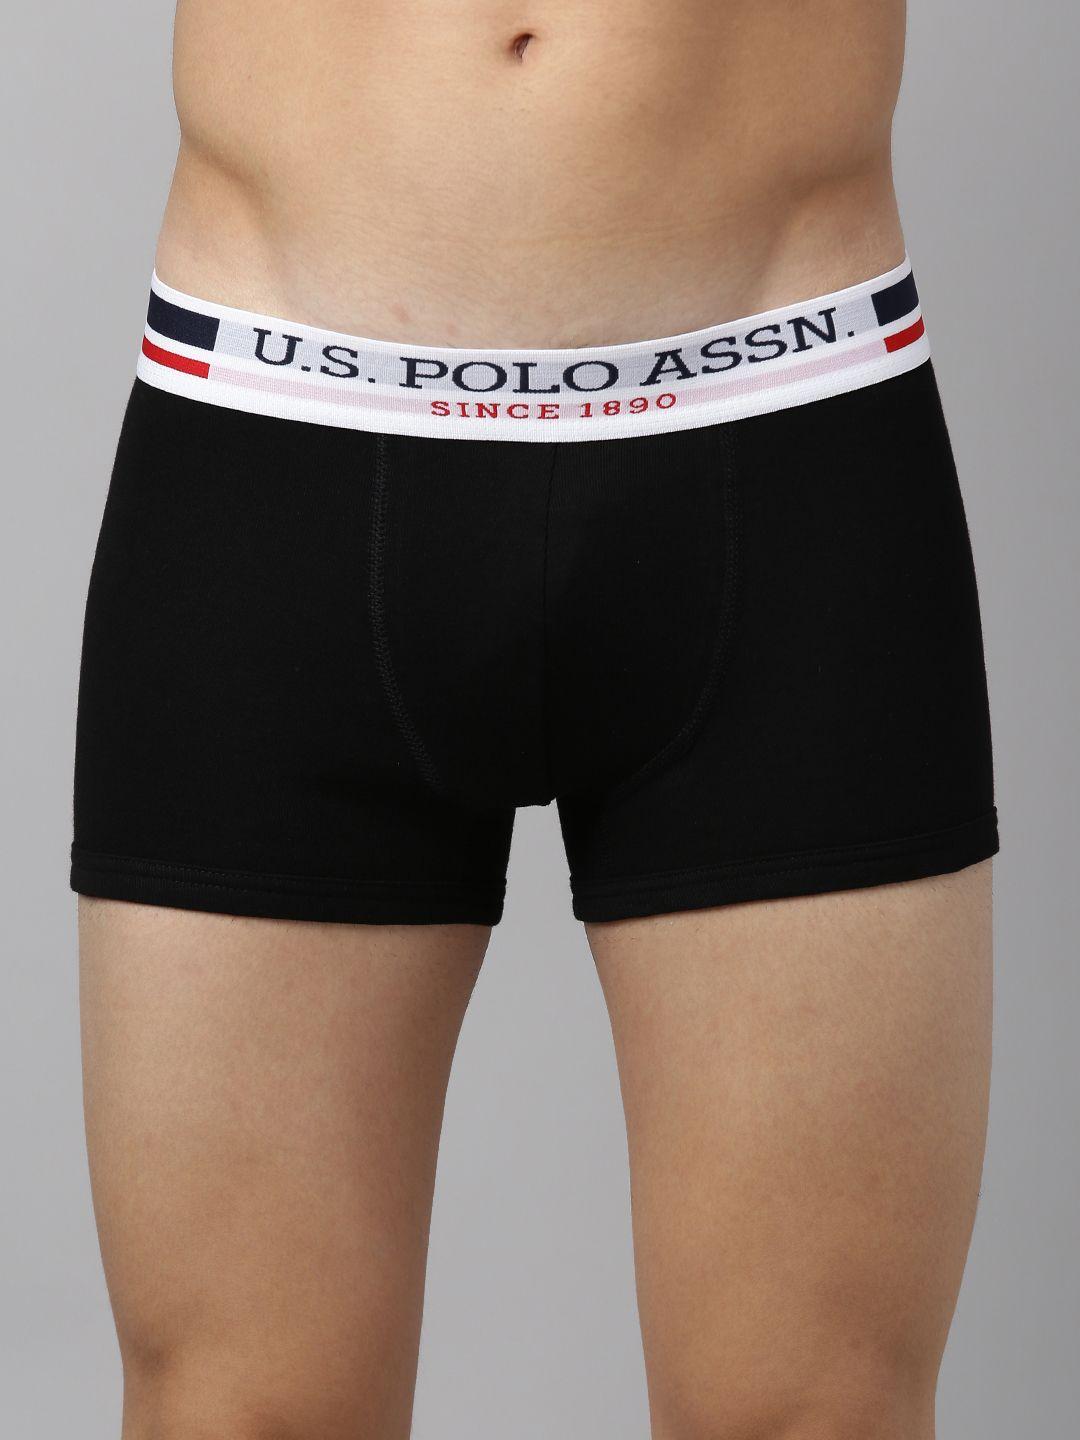 U.S. Polo Assn. Men Black Solid Trunks I641-002-P1